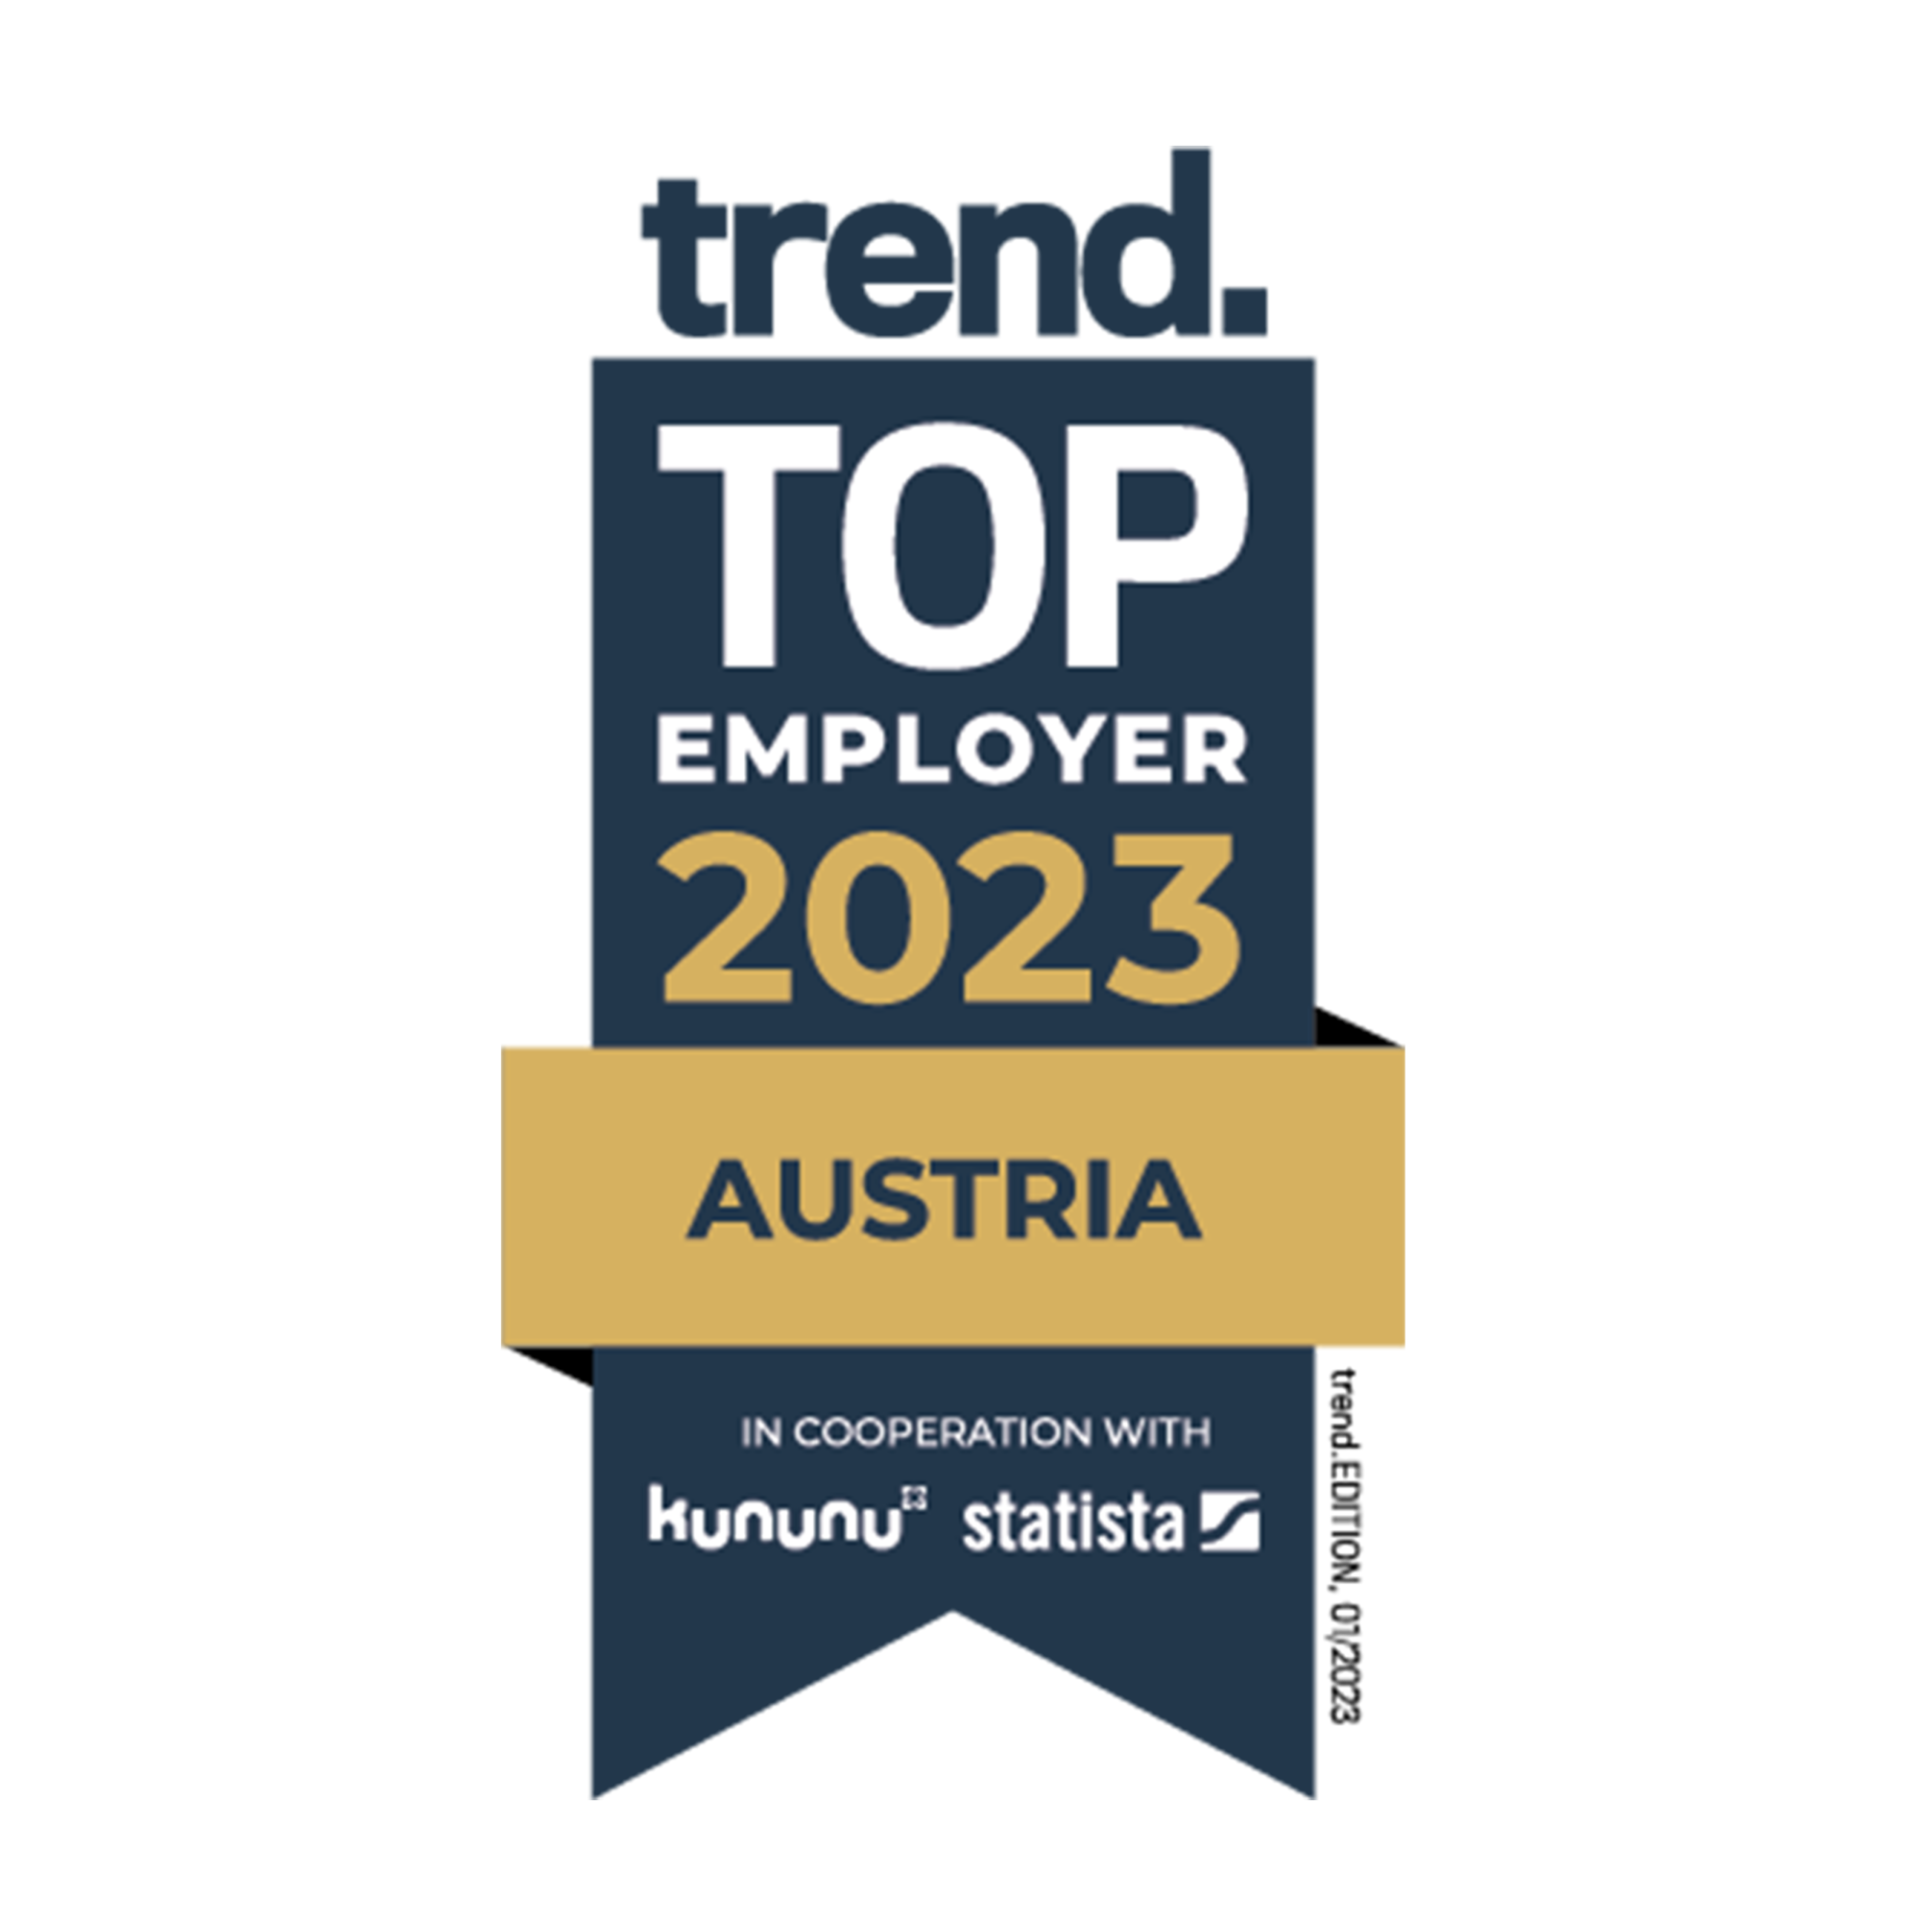 Top employer 2023 - Austria